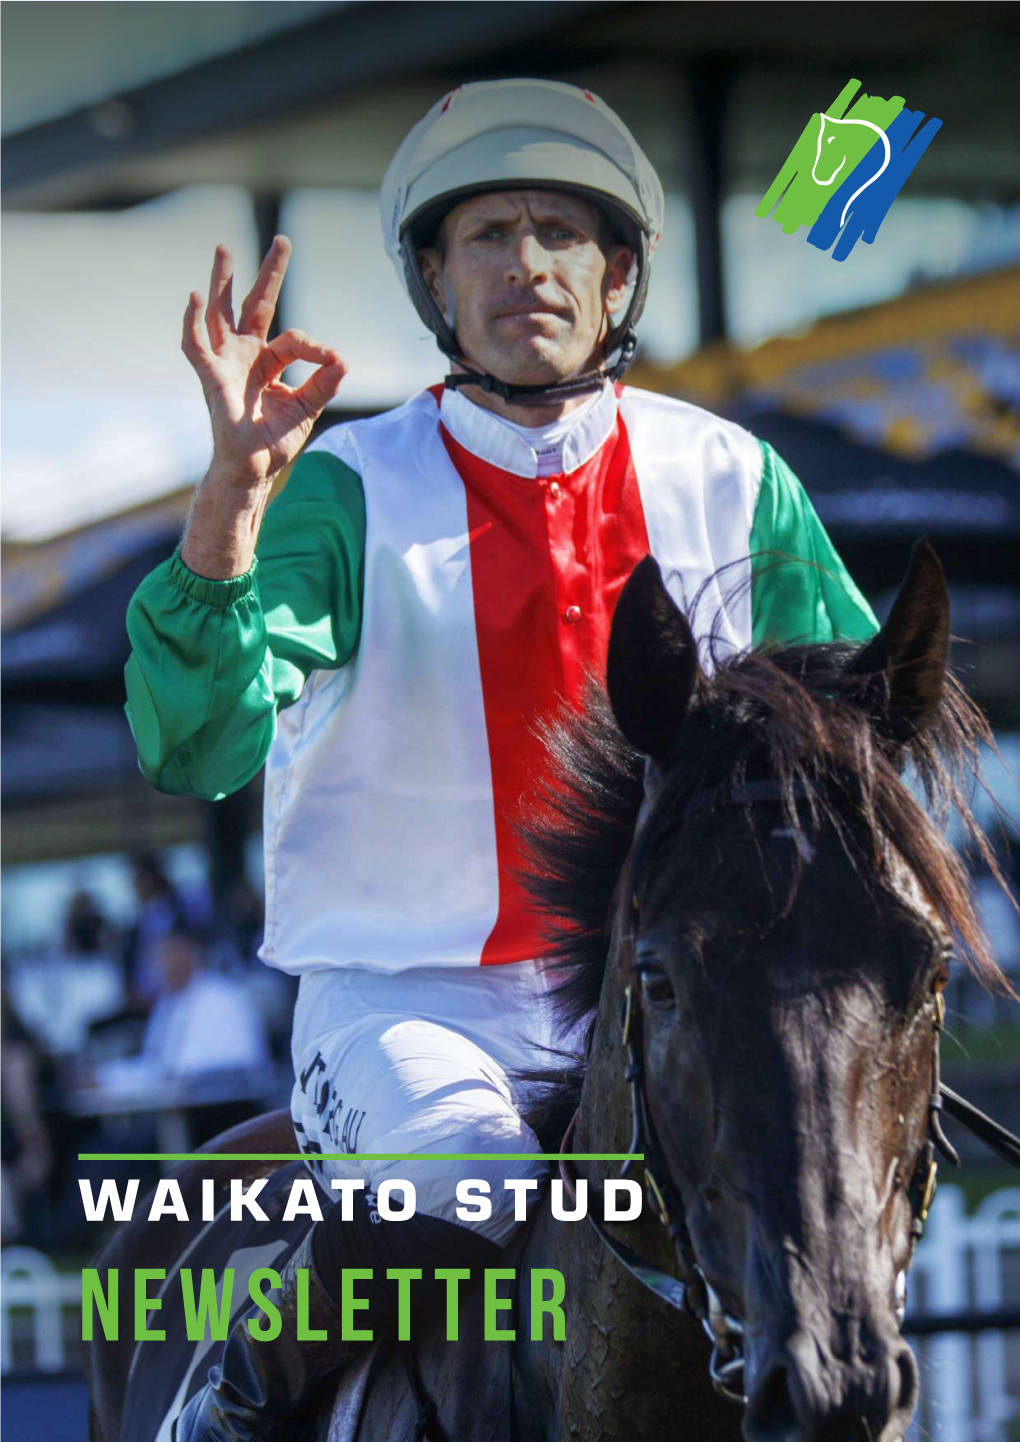 The Waikato Newsletter